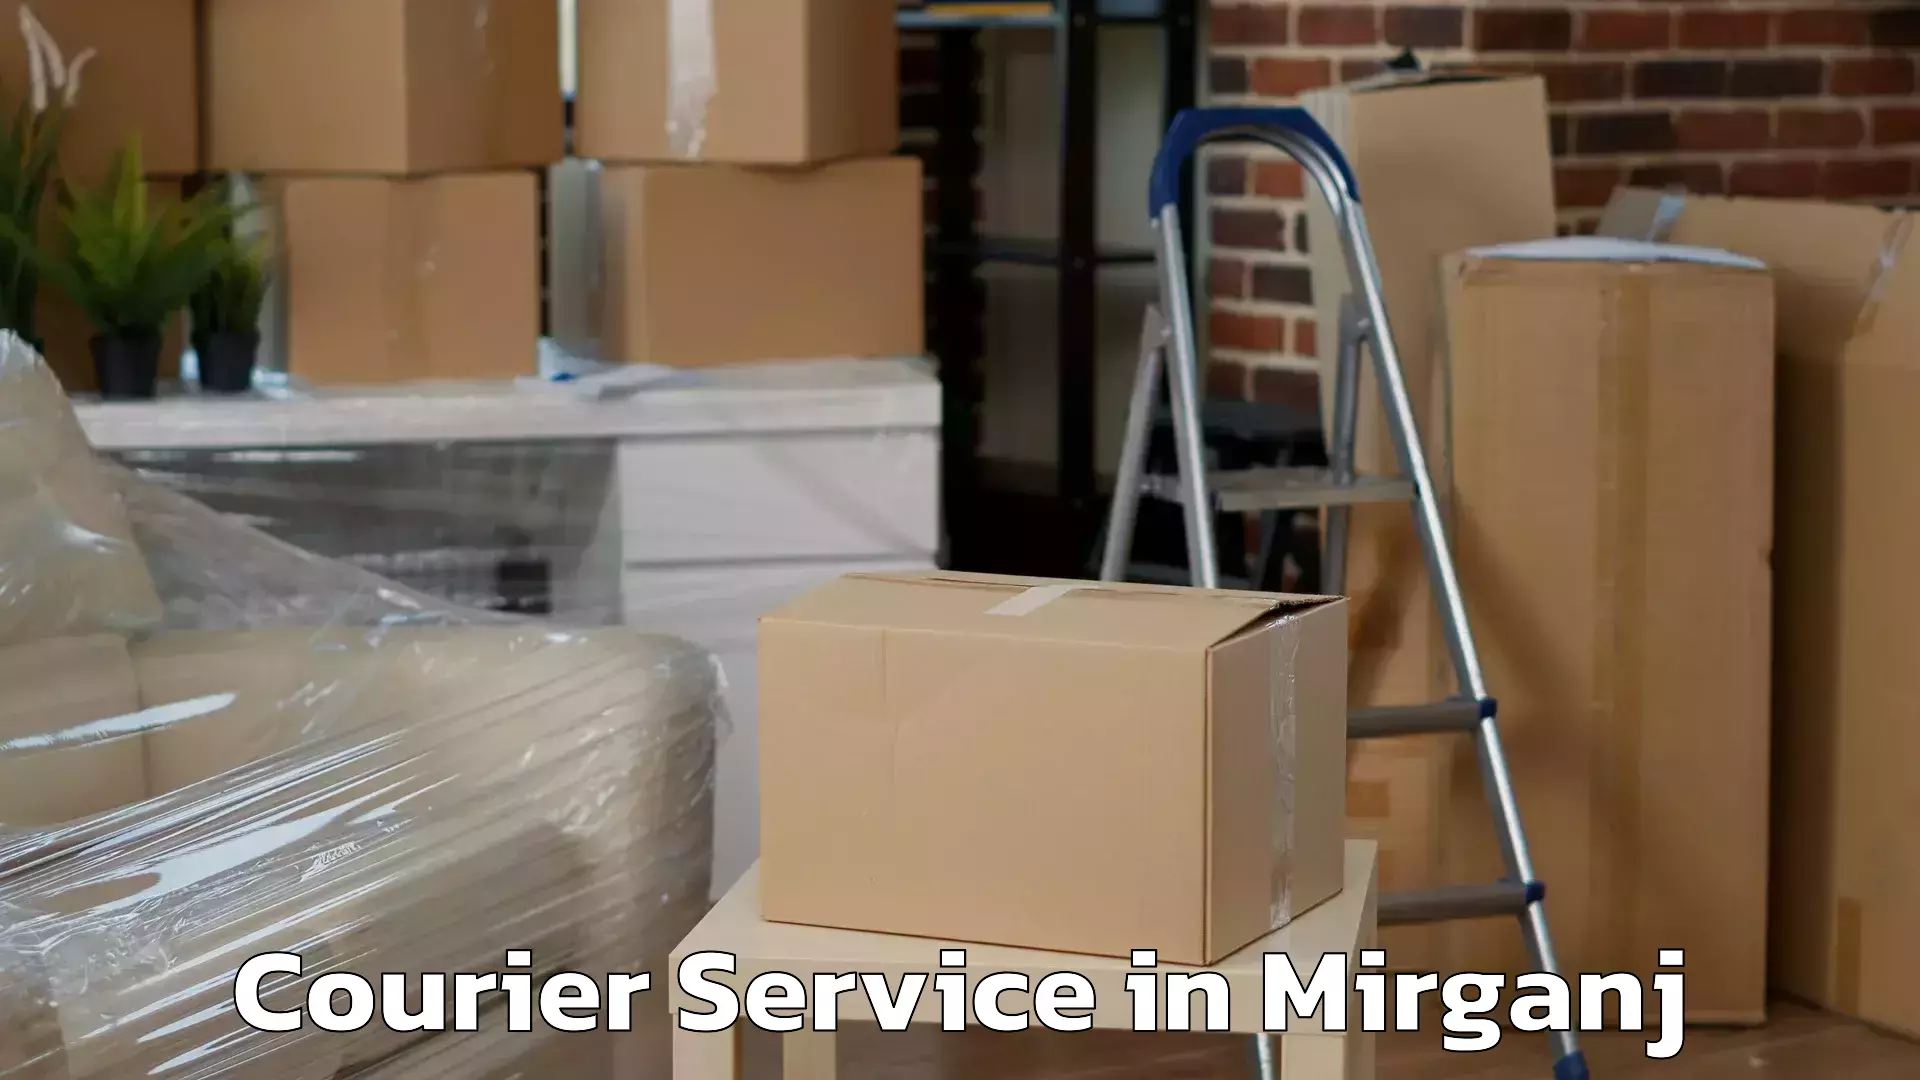 Efficient logistics management in Mirganj